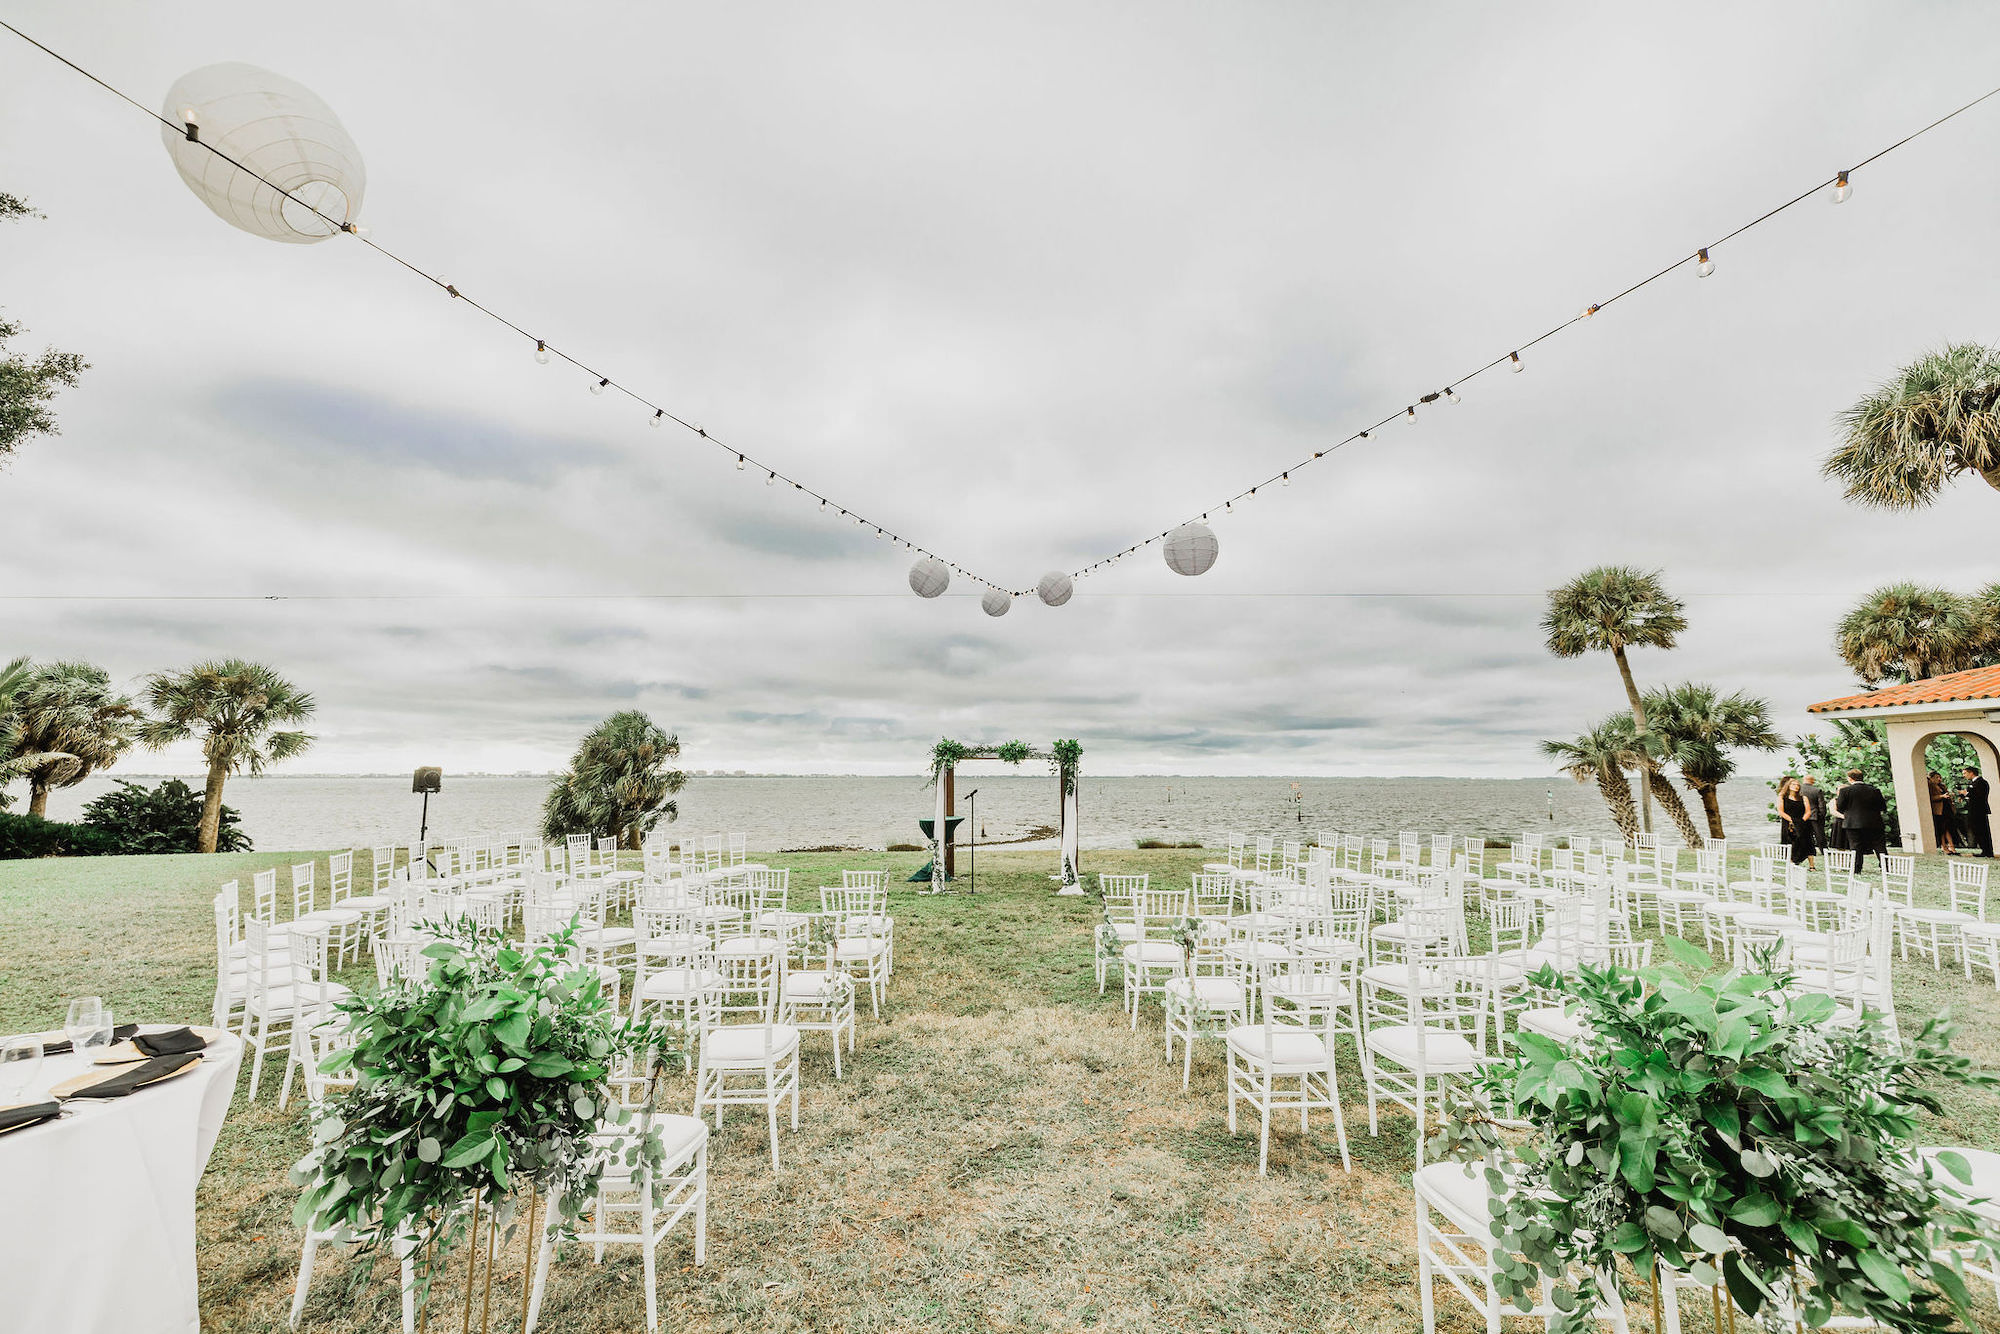 Unique Circular Wedding Ceremony Seating Ideas | White Chiavari Chairs | Outdoor Waterfront Sarasota Ceremony Venue Powel Crosley Estate